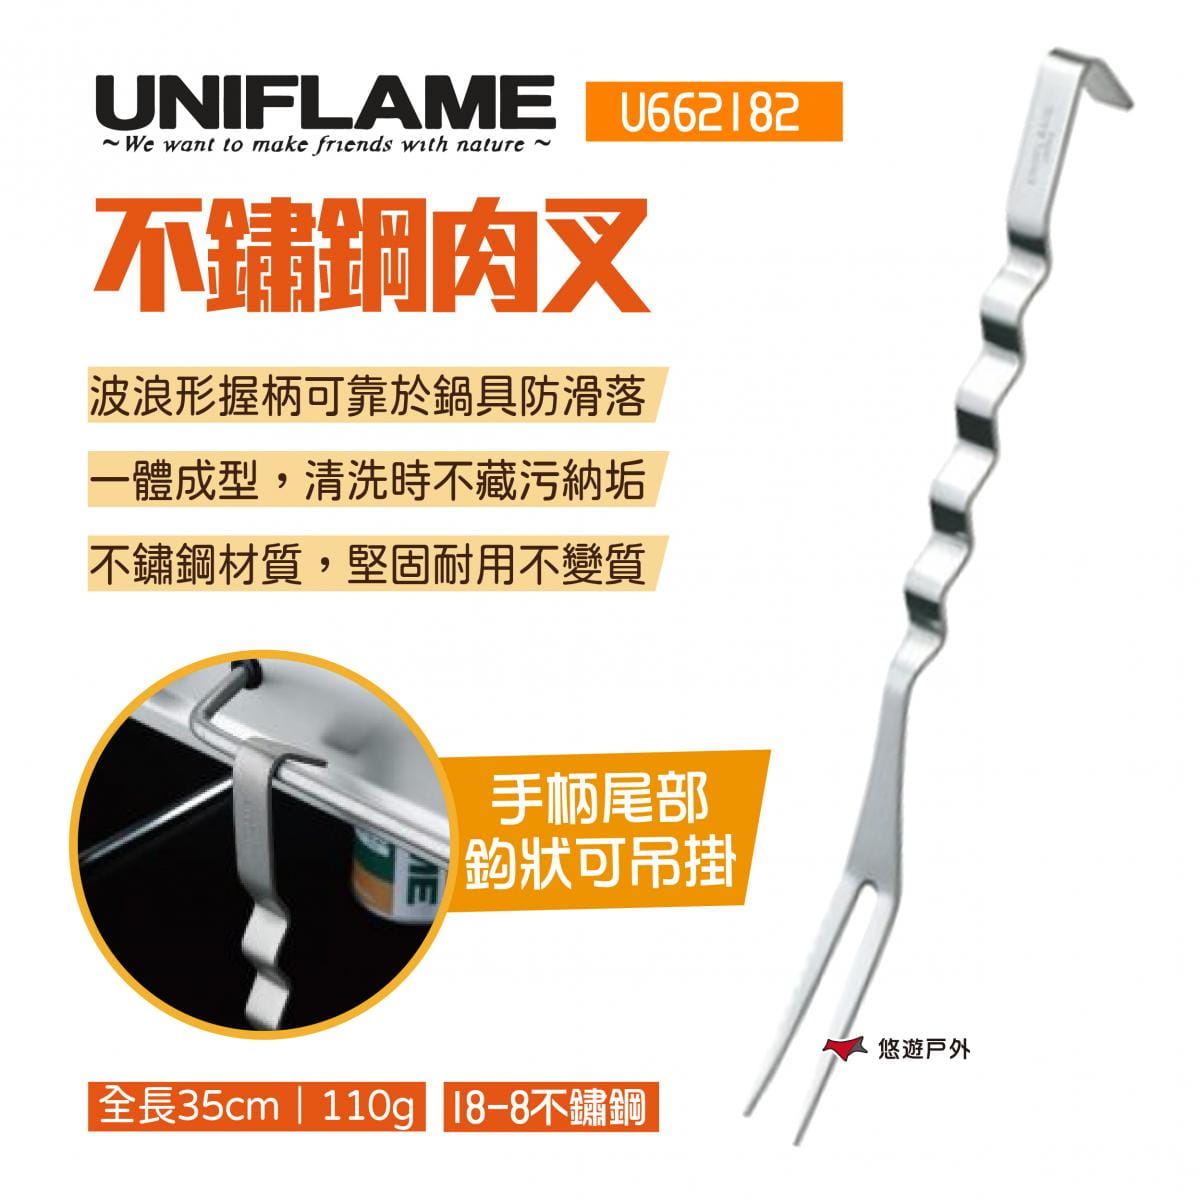 【UNIFLAME】不鏽鋼肉叉 U662182 (悠遊戶外) 0